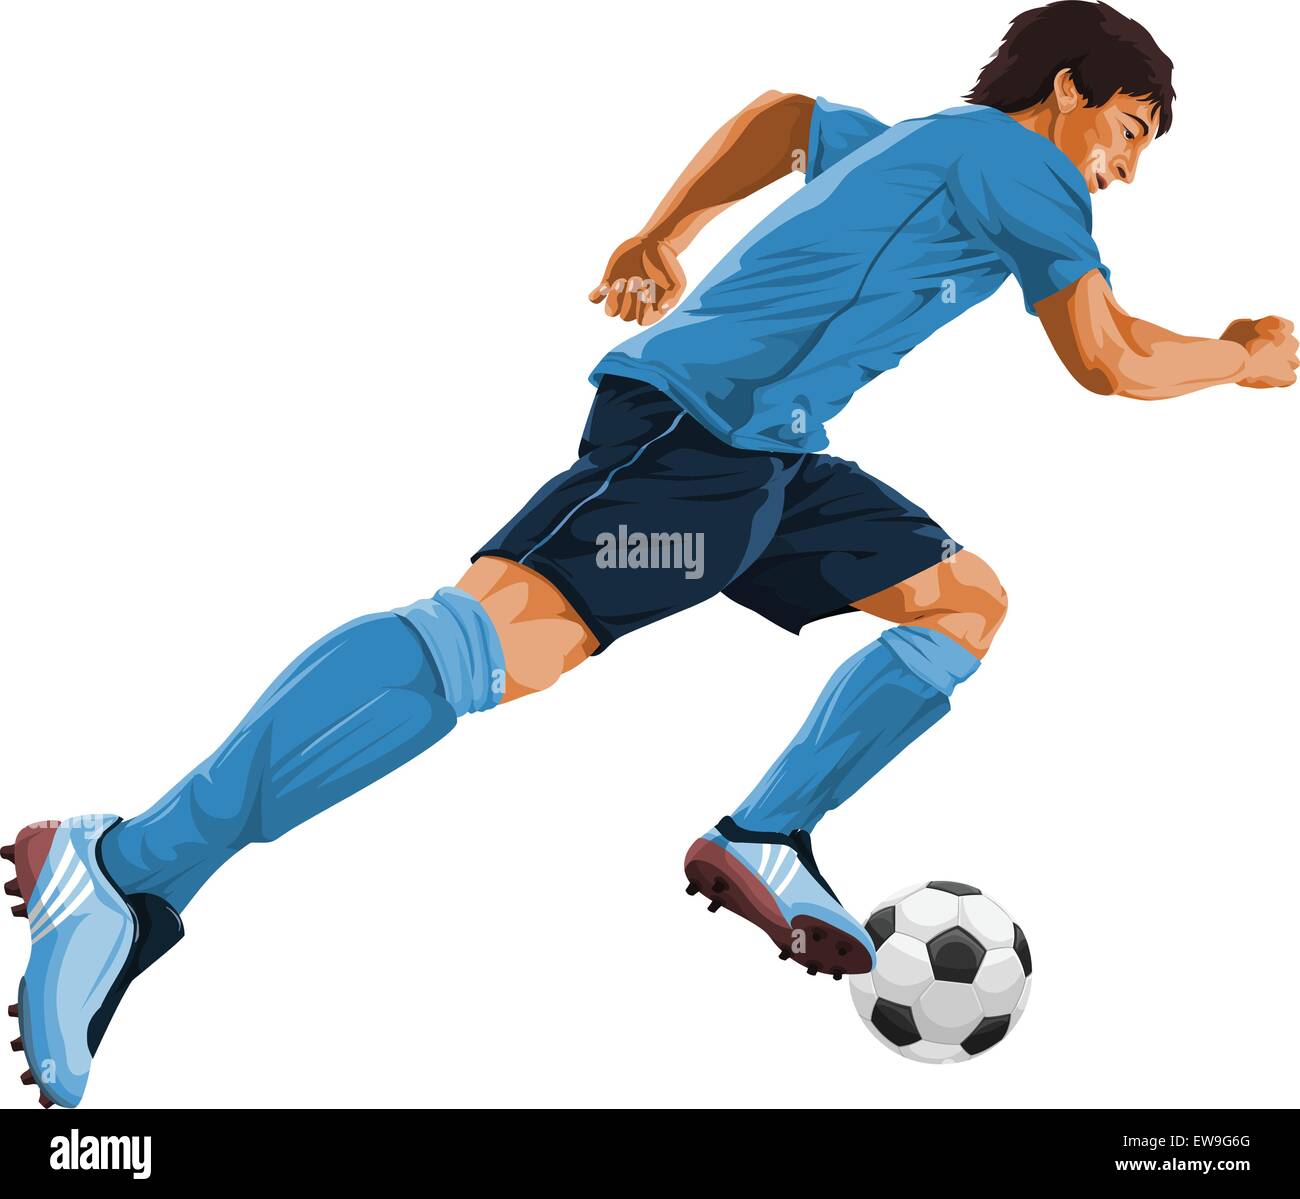 Footballer kicking ball Stock Vector Images - Alamy